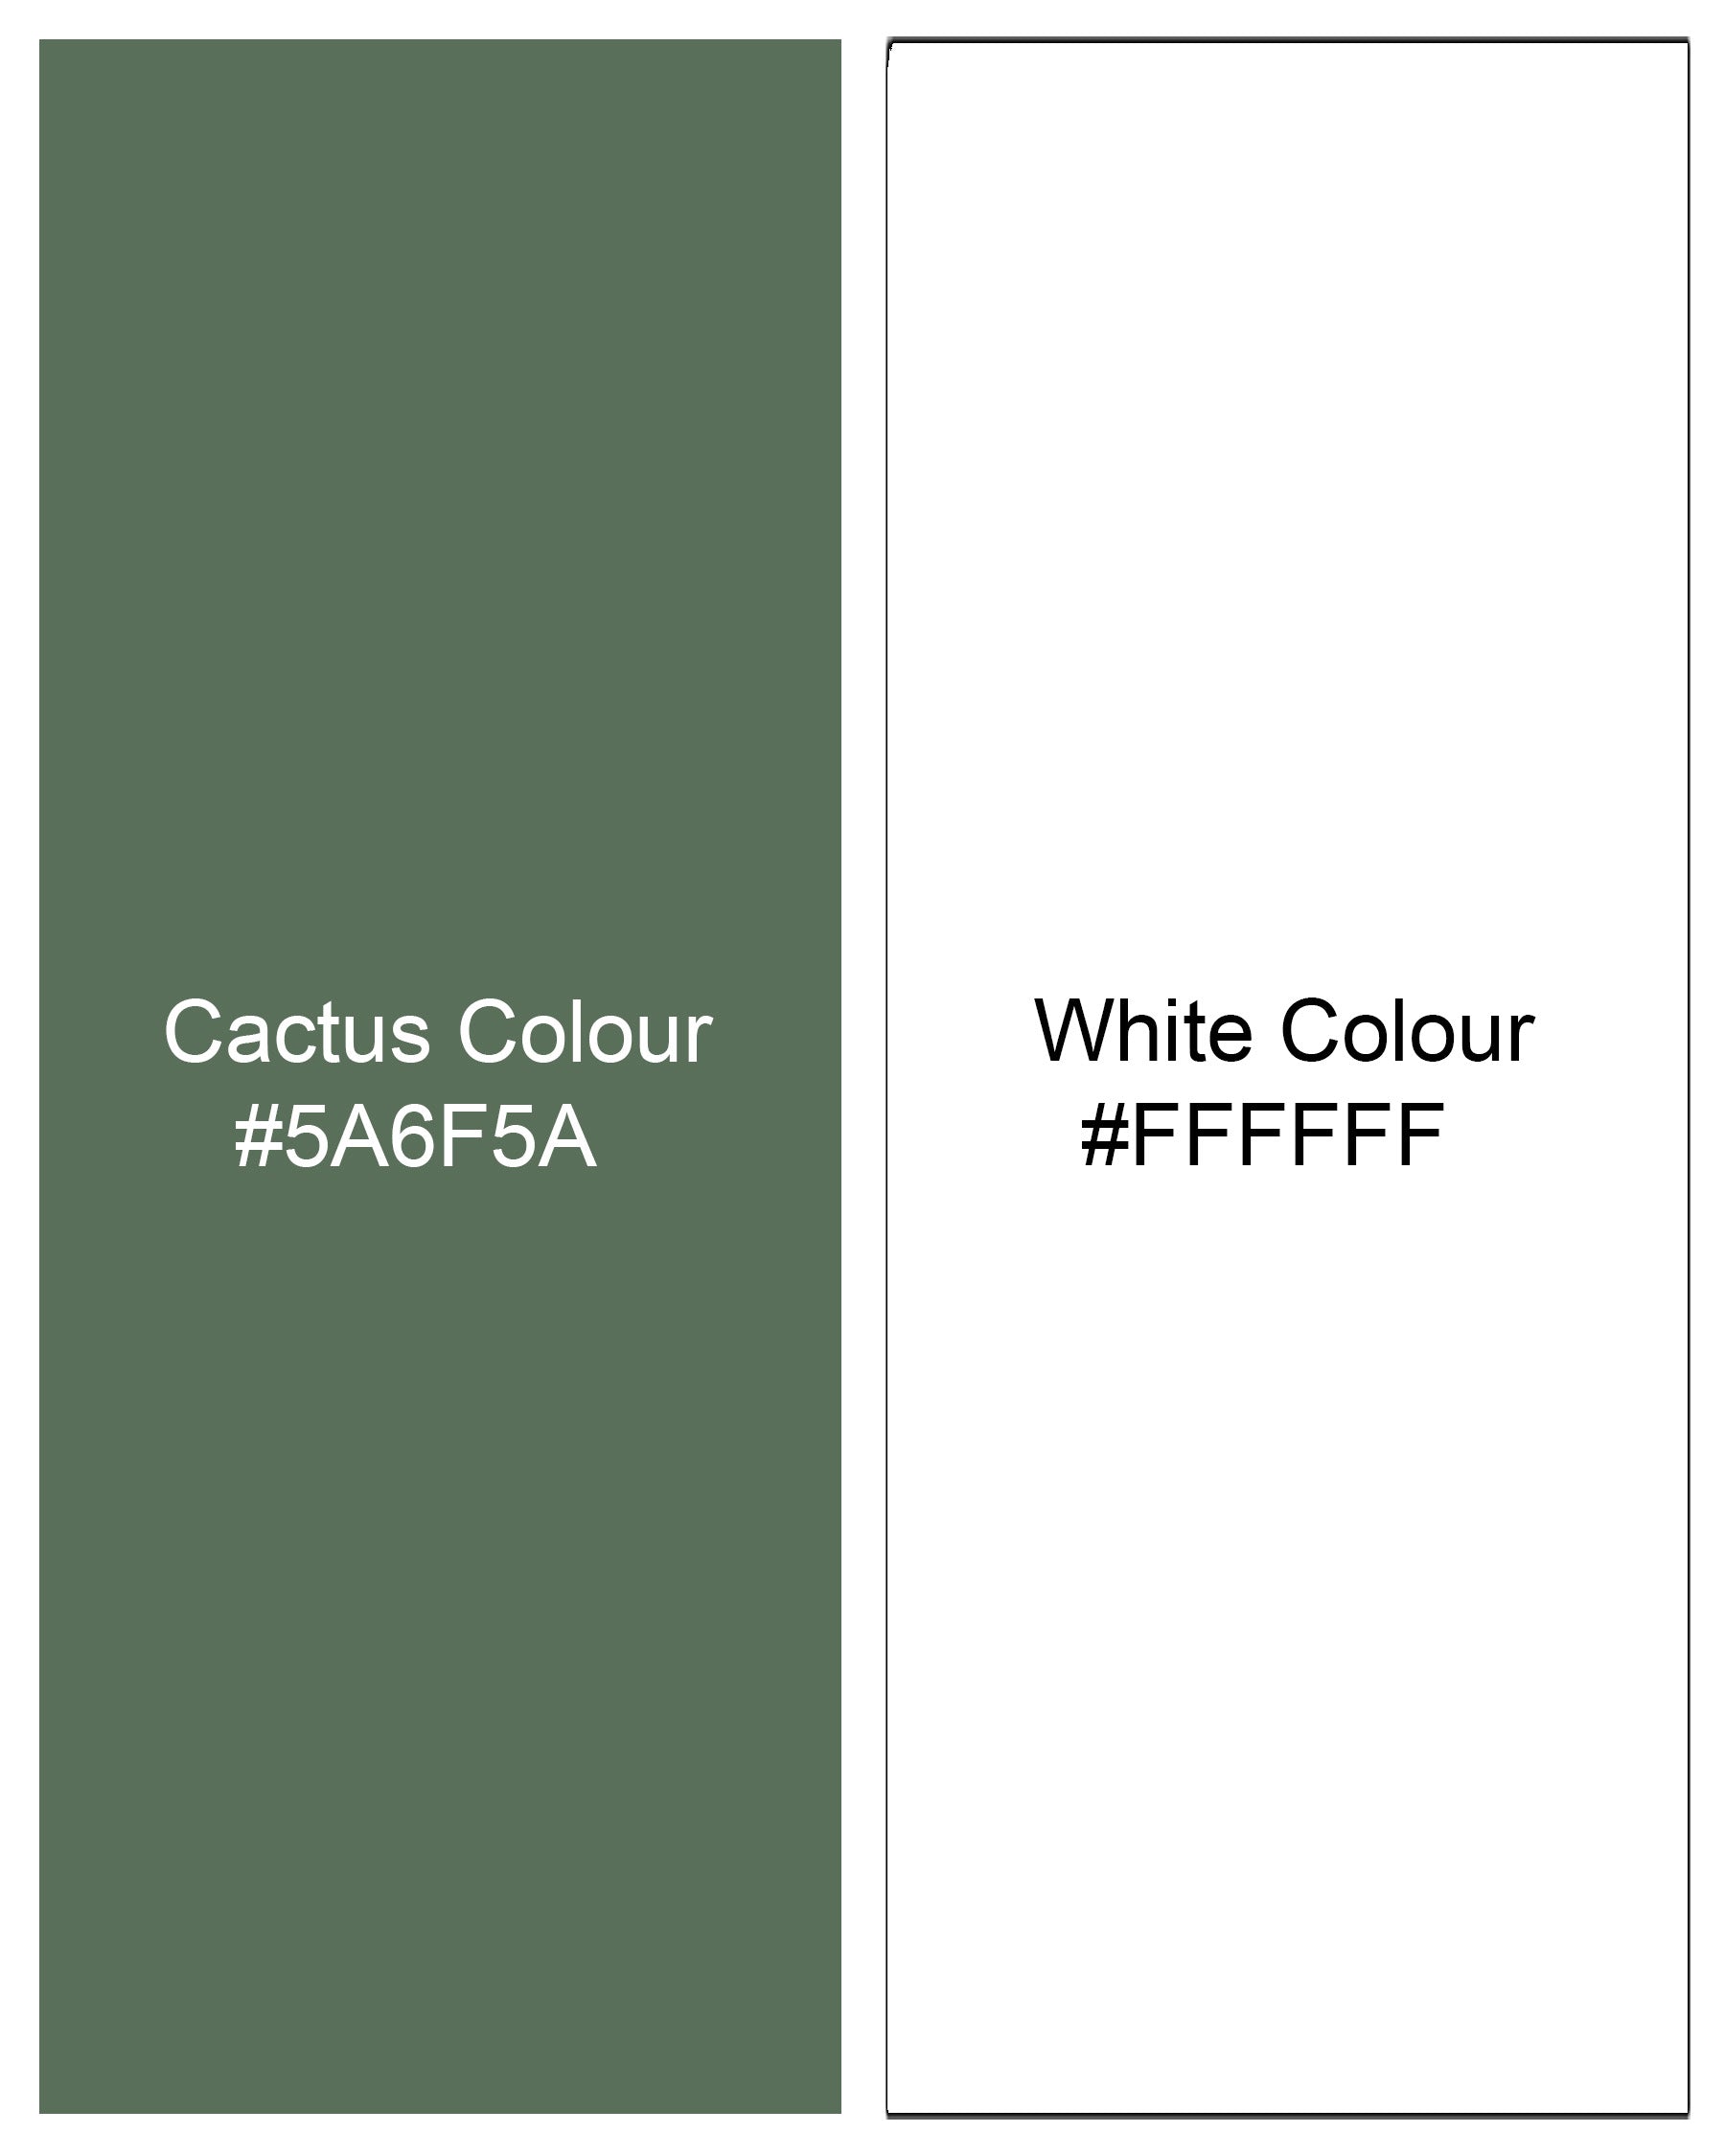 Cactus Green and Bright White Twill Striped Premium Cotton Shirt 8212-BD -38,8212-BD -H-38,8212-BD -39,8212-BD -H-39,8212-BD -40,8212-BD -H-40,8212-BD -42,8212-BD -H-42,8212-BD -44,8212-BD -H-44,8212-BD -46,8212-BD -H-46,8212-BD -48,8212-BD -H-48,8212-BD -50,8212-BD -H-50,8212-BD -52,8212-BD -H-52